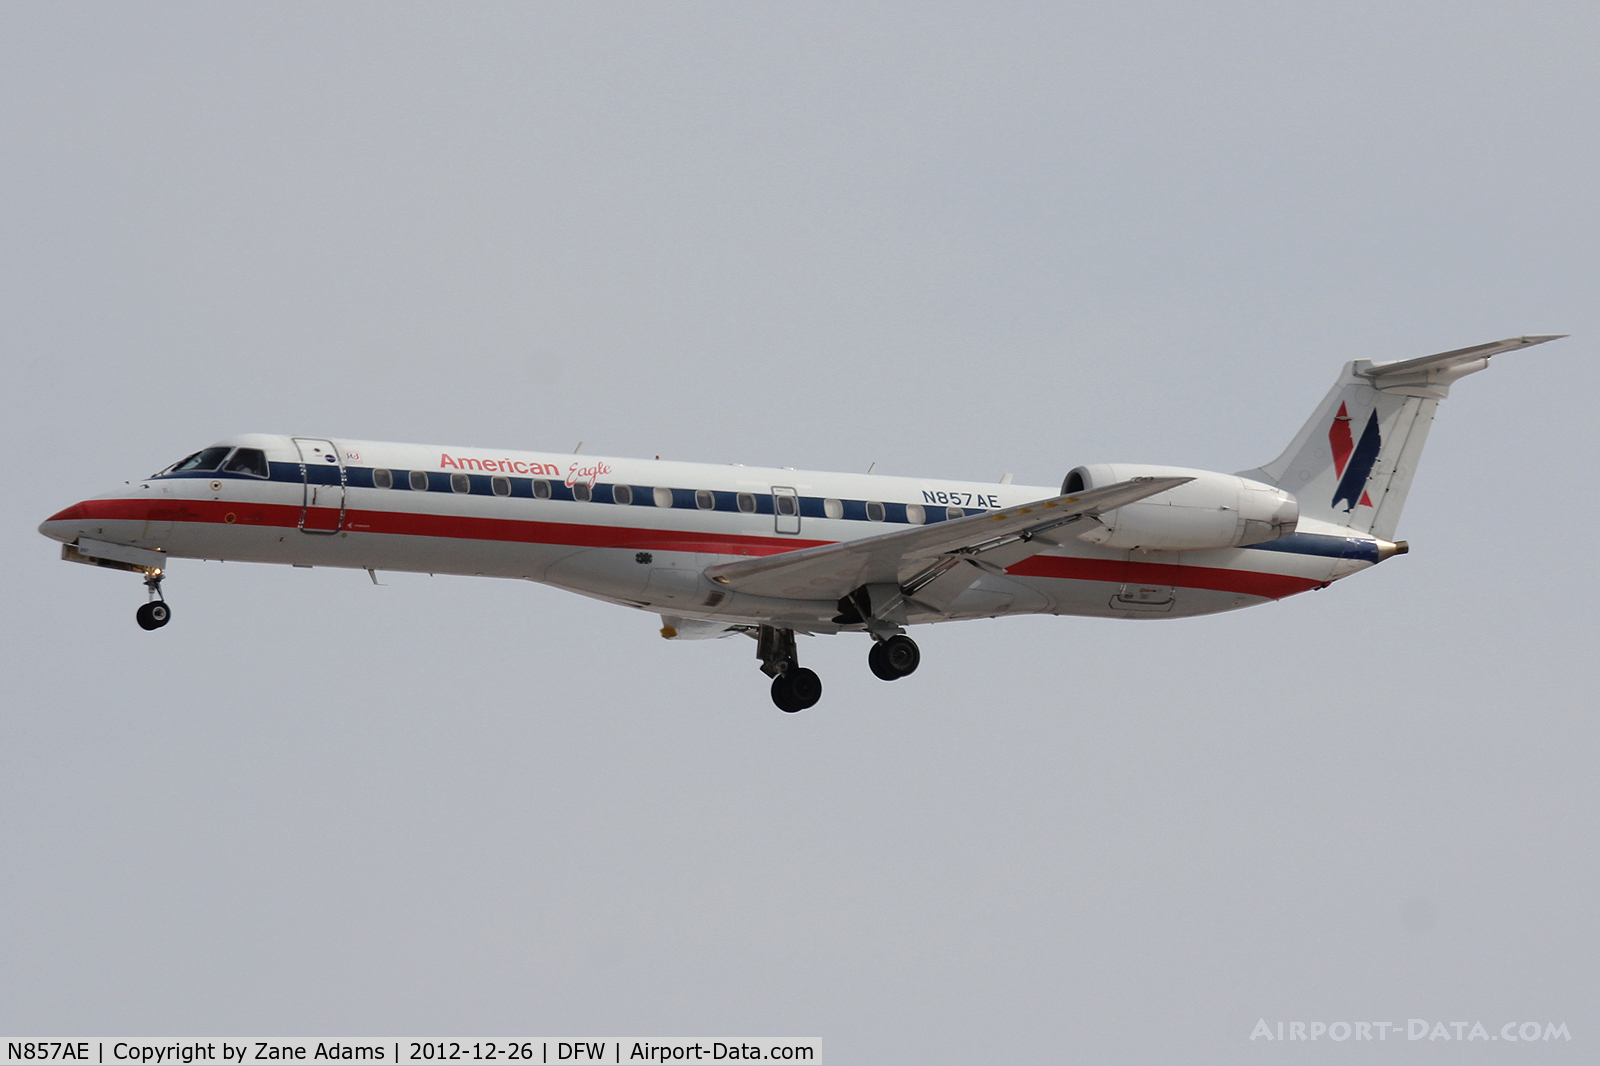 N857AE, 2003 Embraer ERJ-140LR (EMB-135KL) C/N 145752, American Eagle landing at DFW Airport.